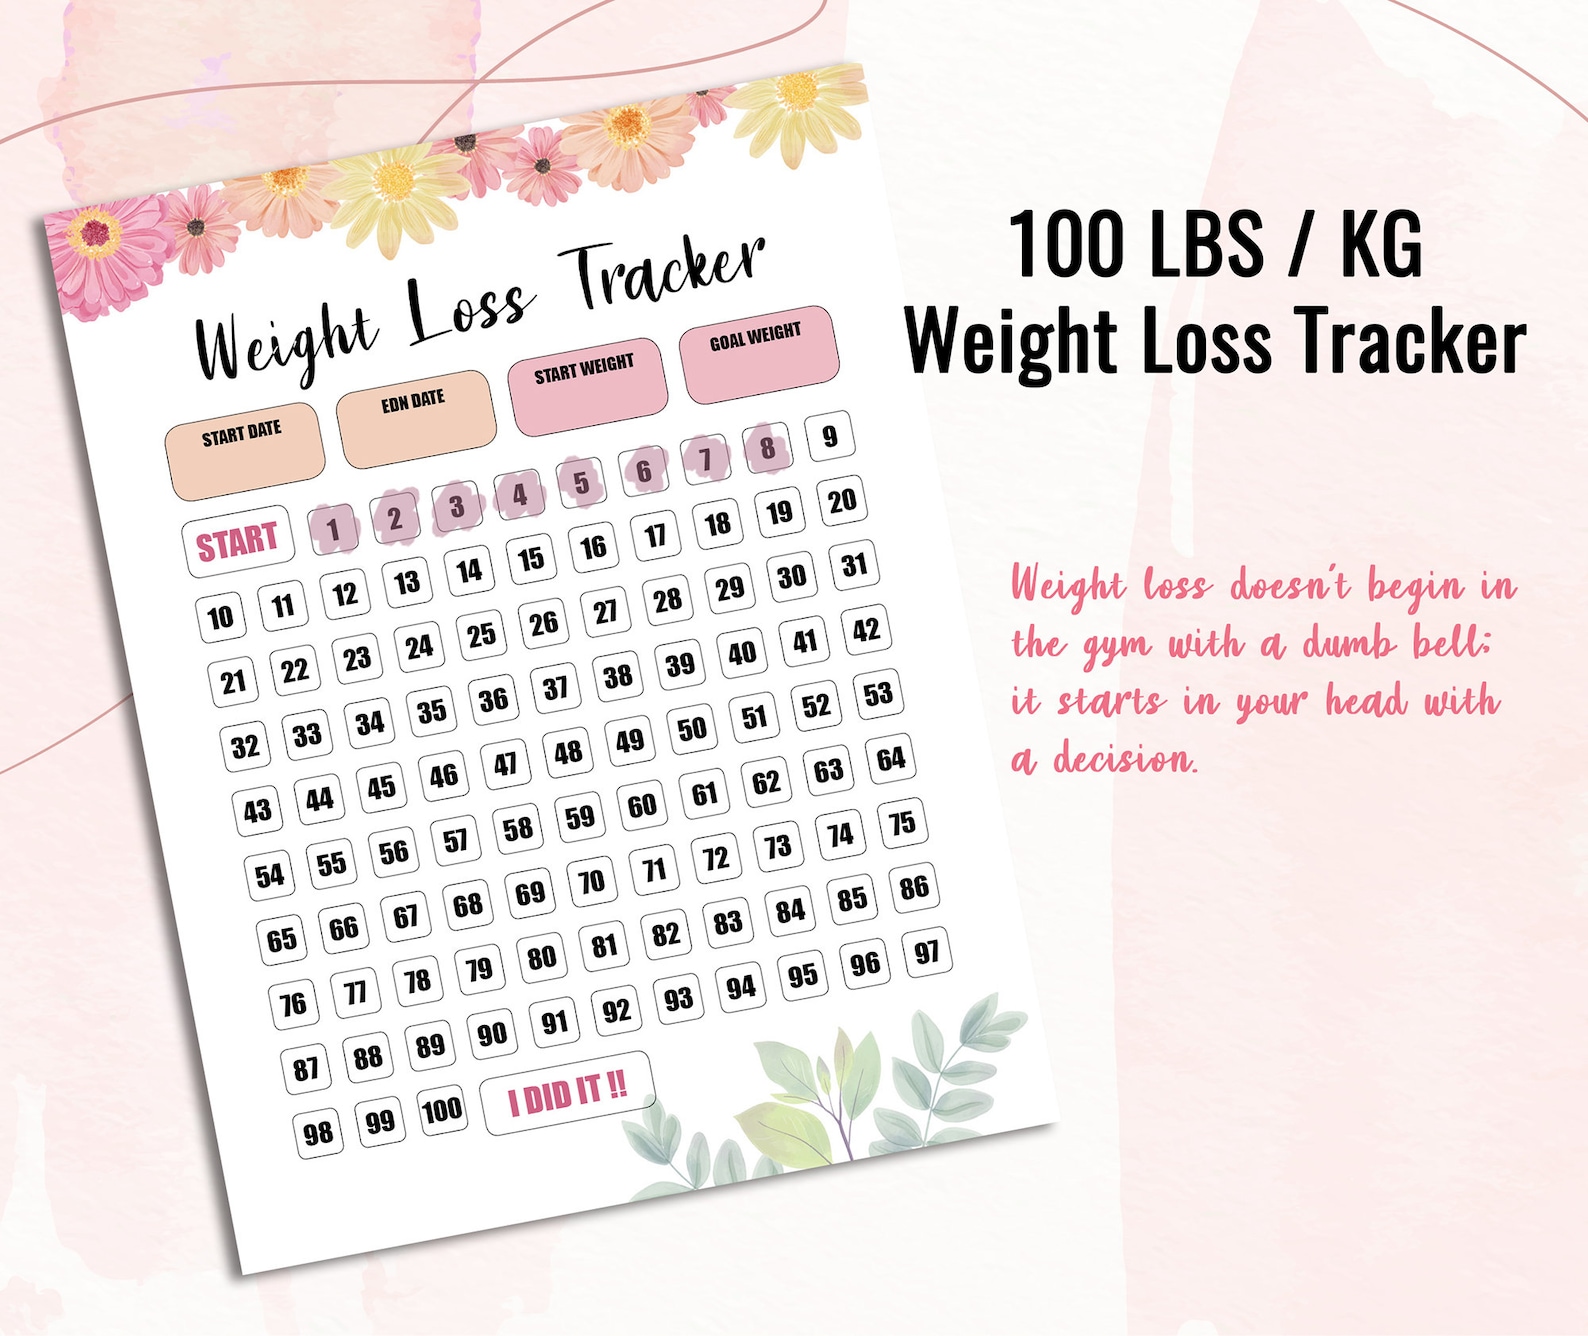 weight loss journey pdf